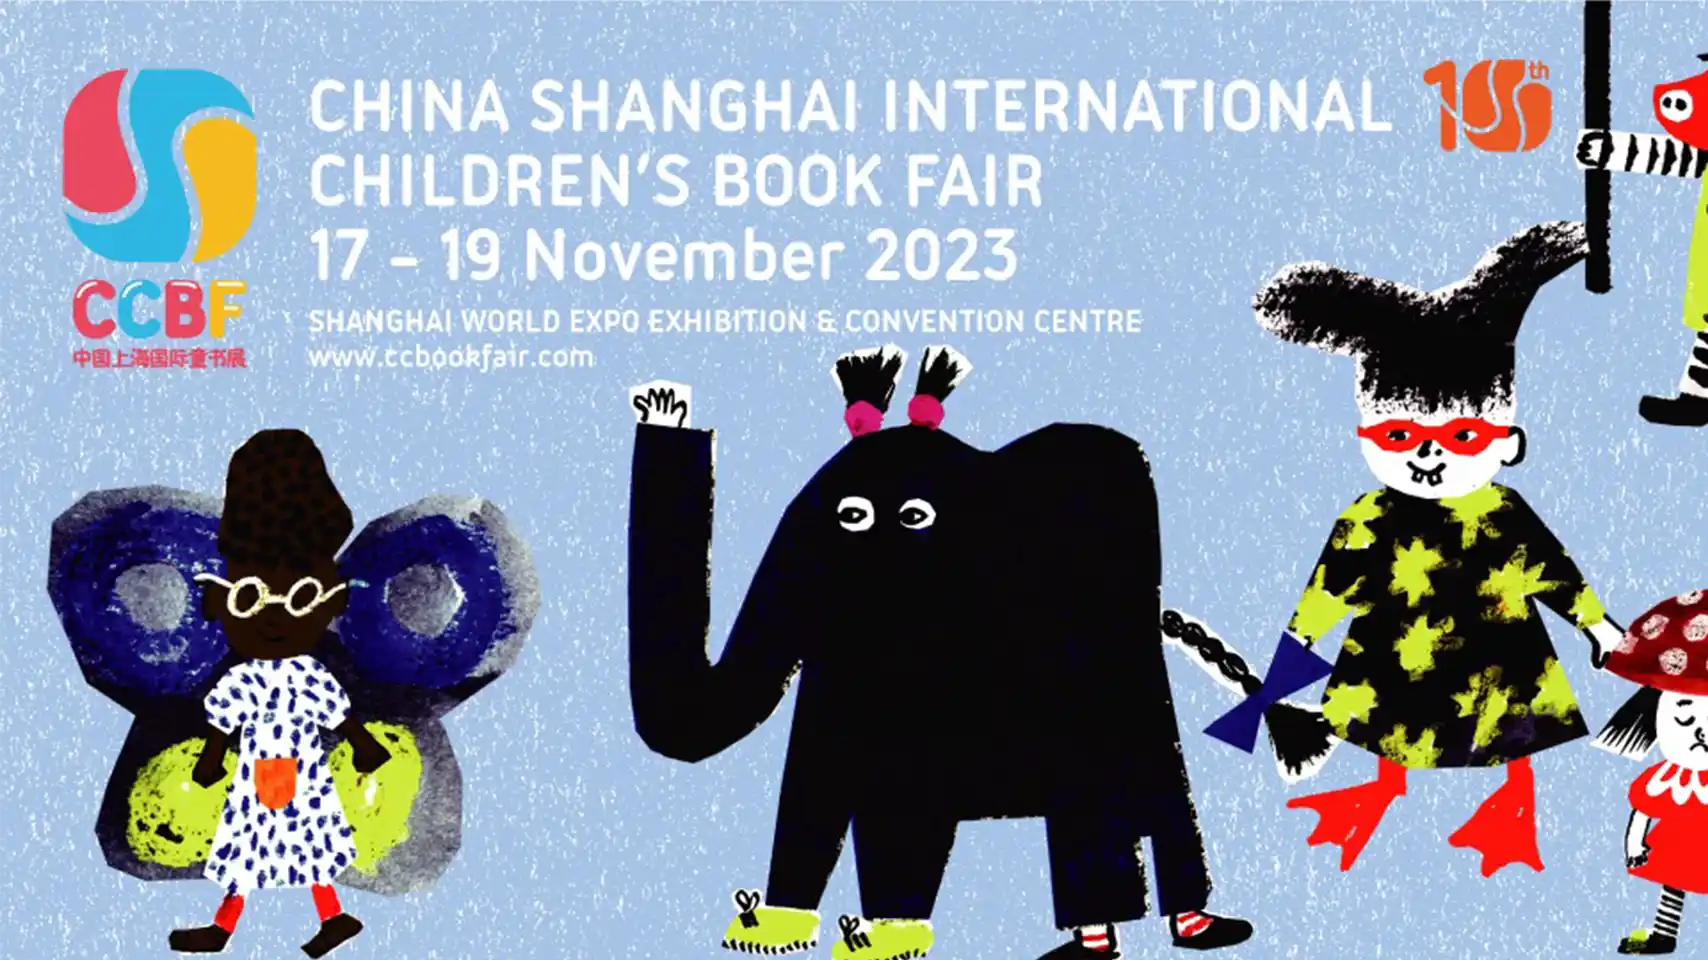 China Shanghai International Children's Book Fair 2023